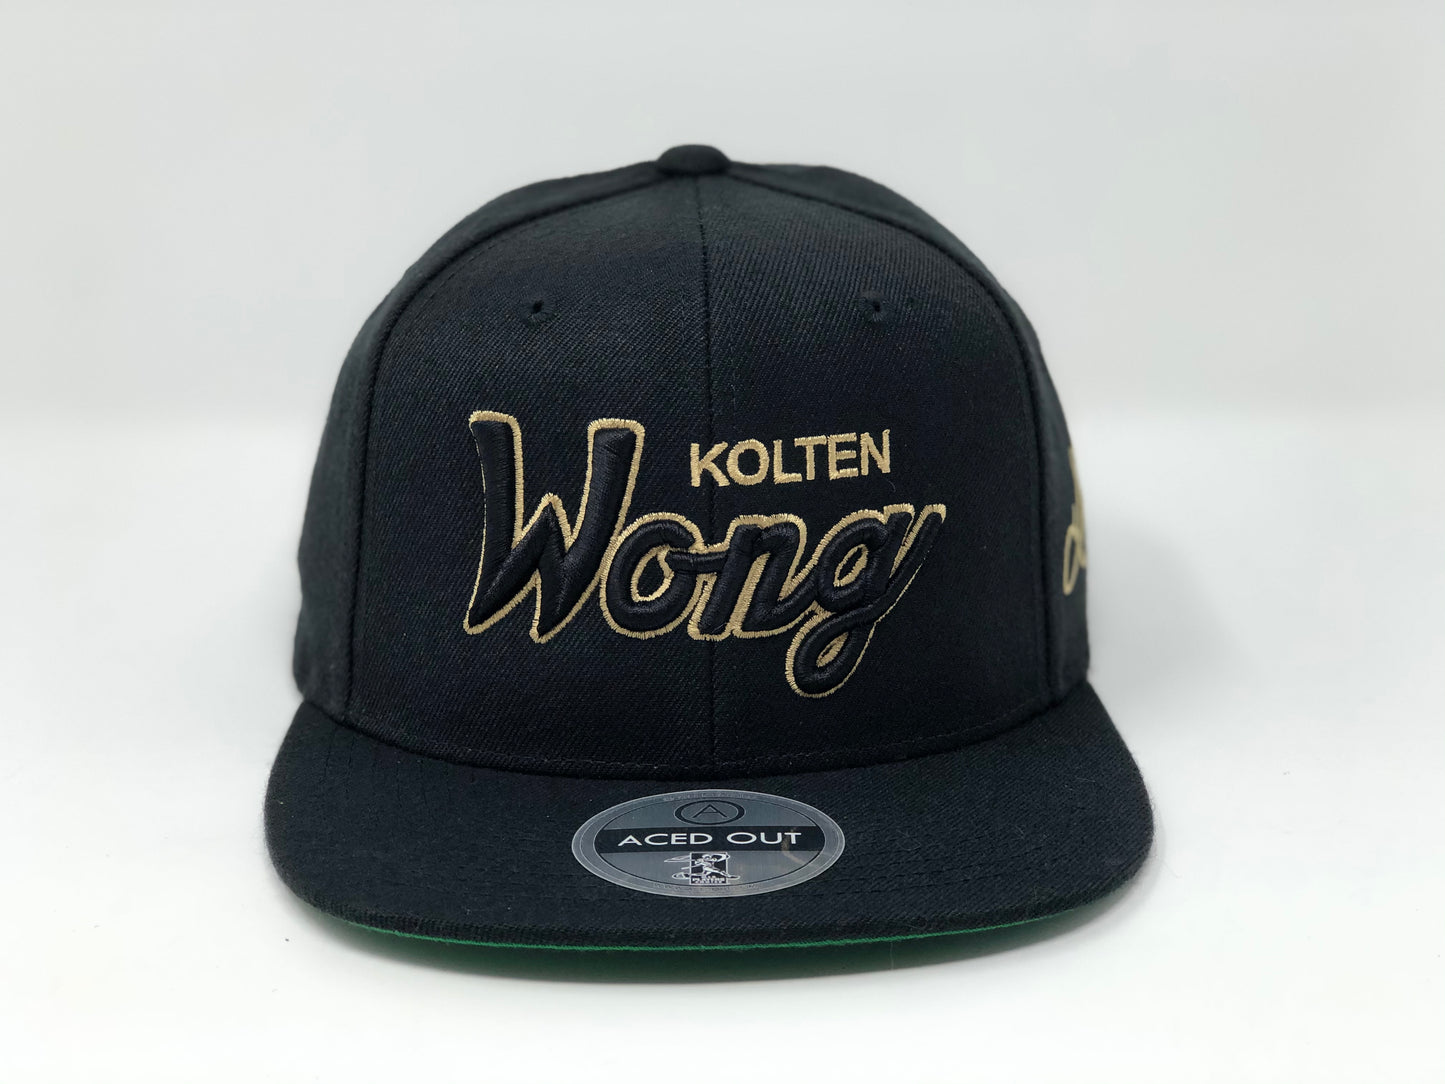 Kolten Wong Script Hat - Gold Glove Edition Black Snapback